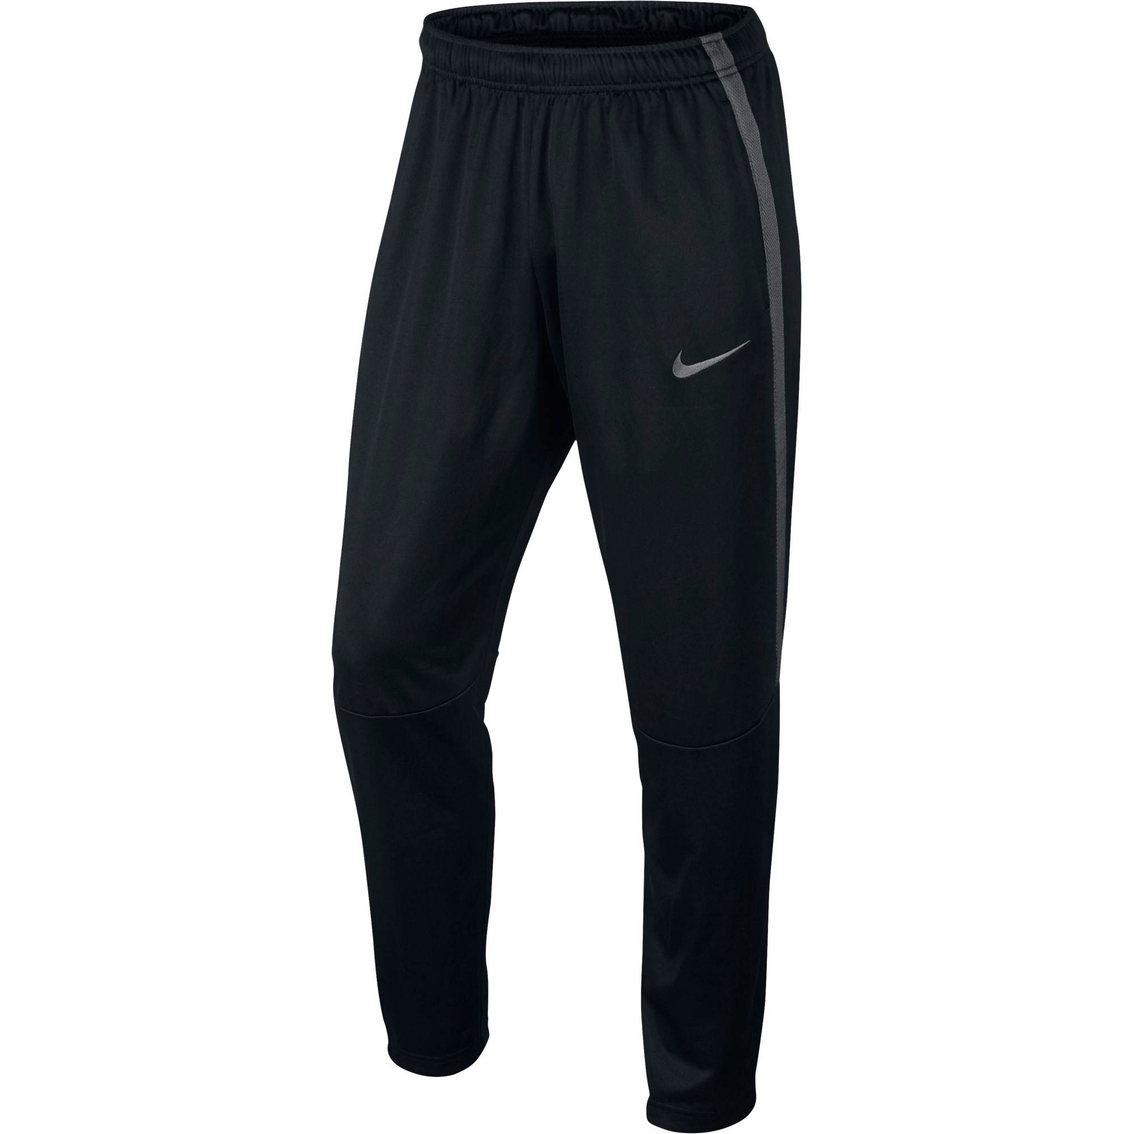 Nike Epic Pants | Pants | Clothing & Accessories | Shop The Exchange